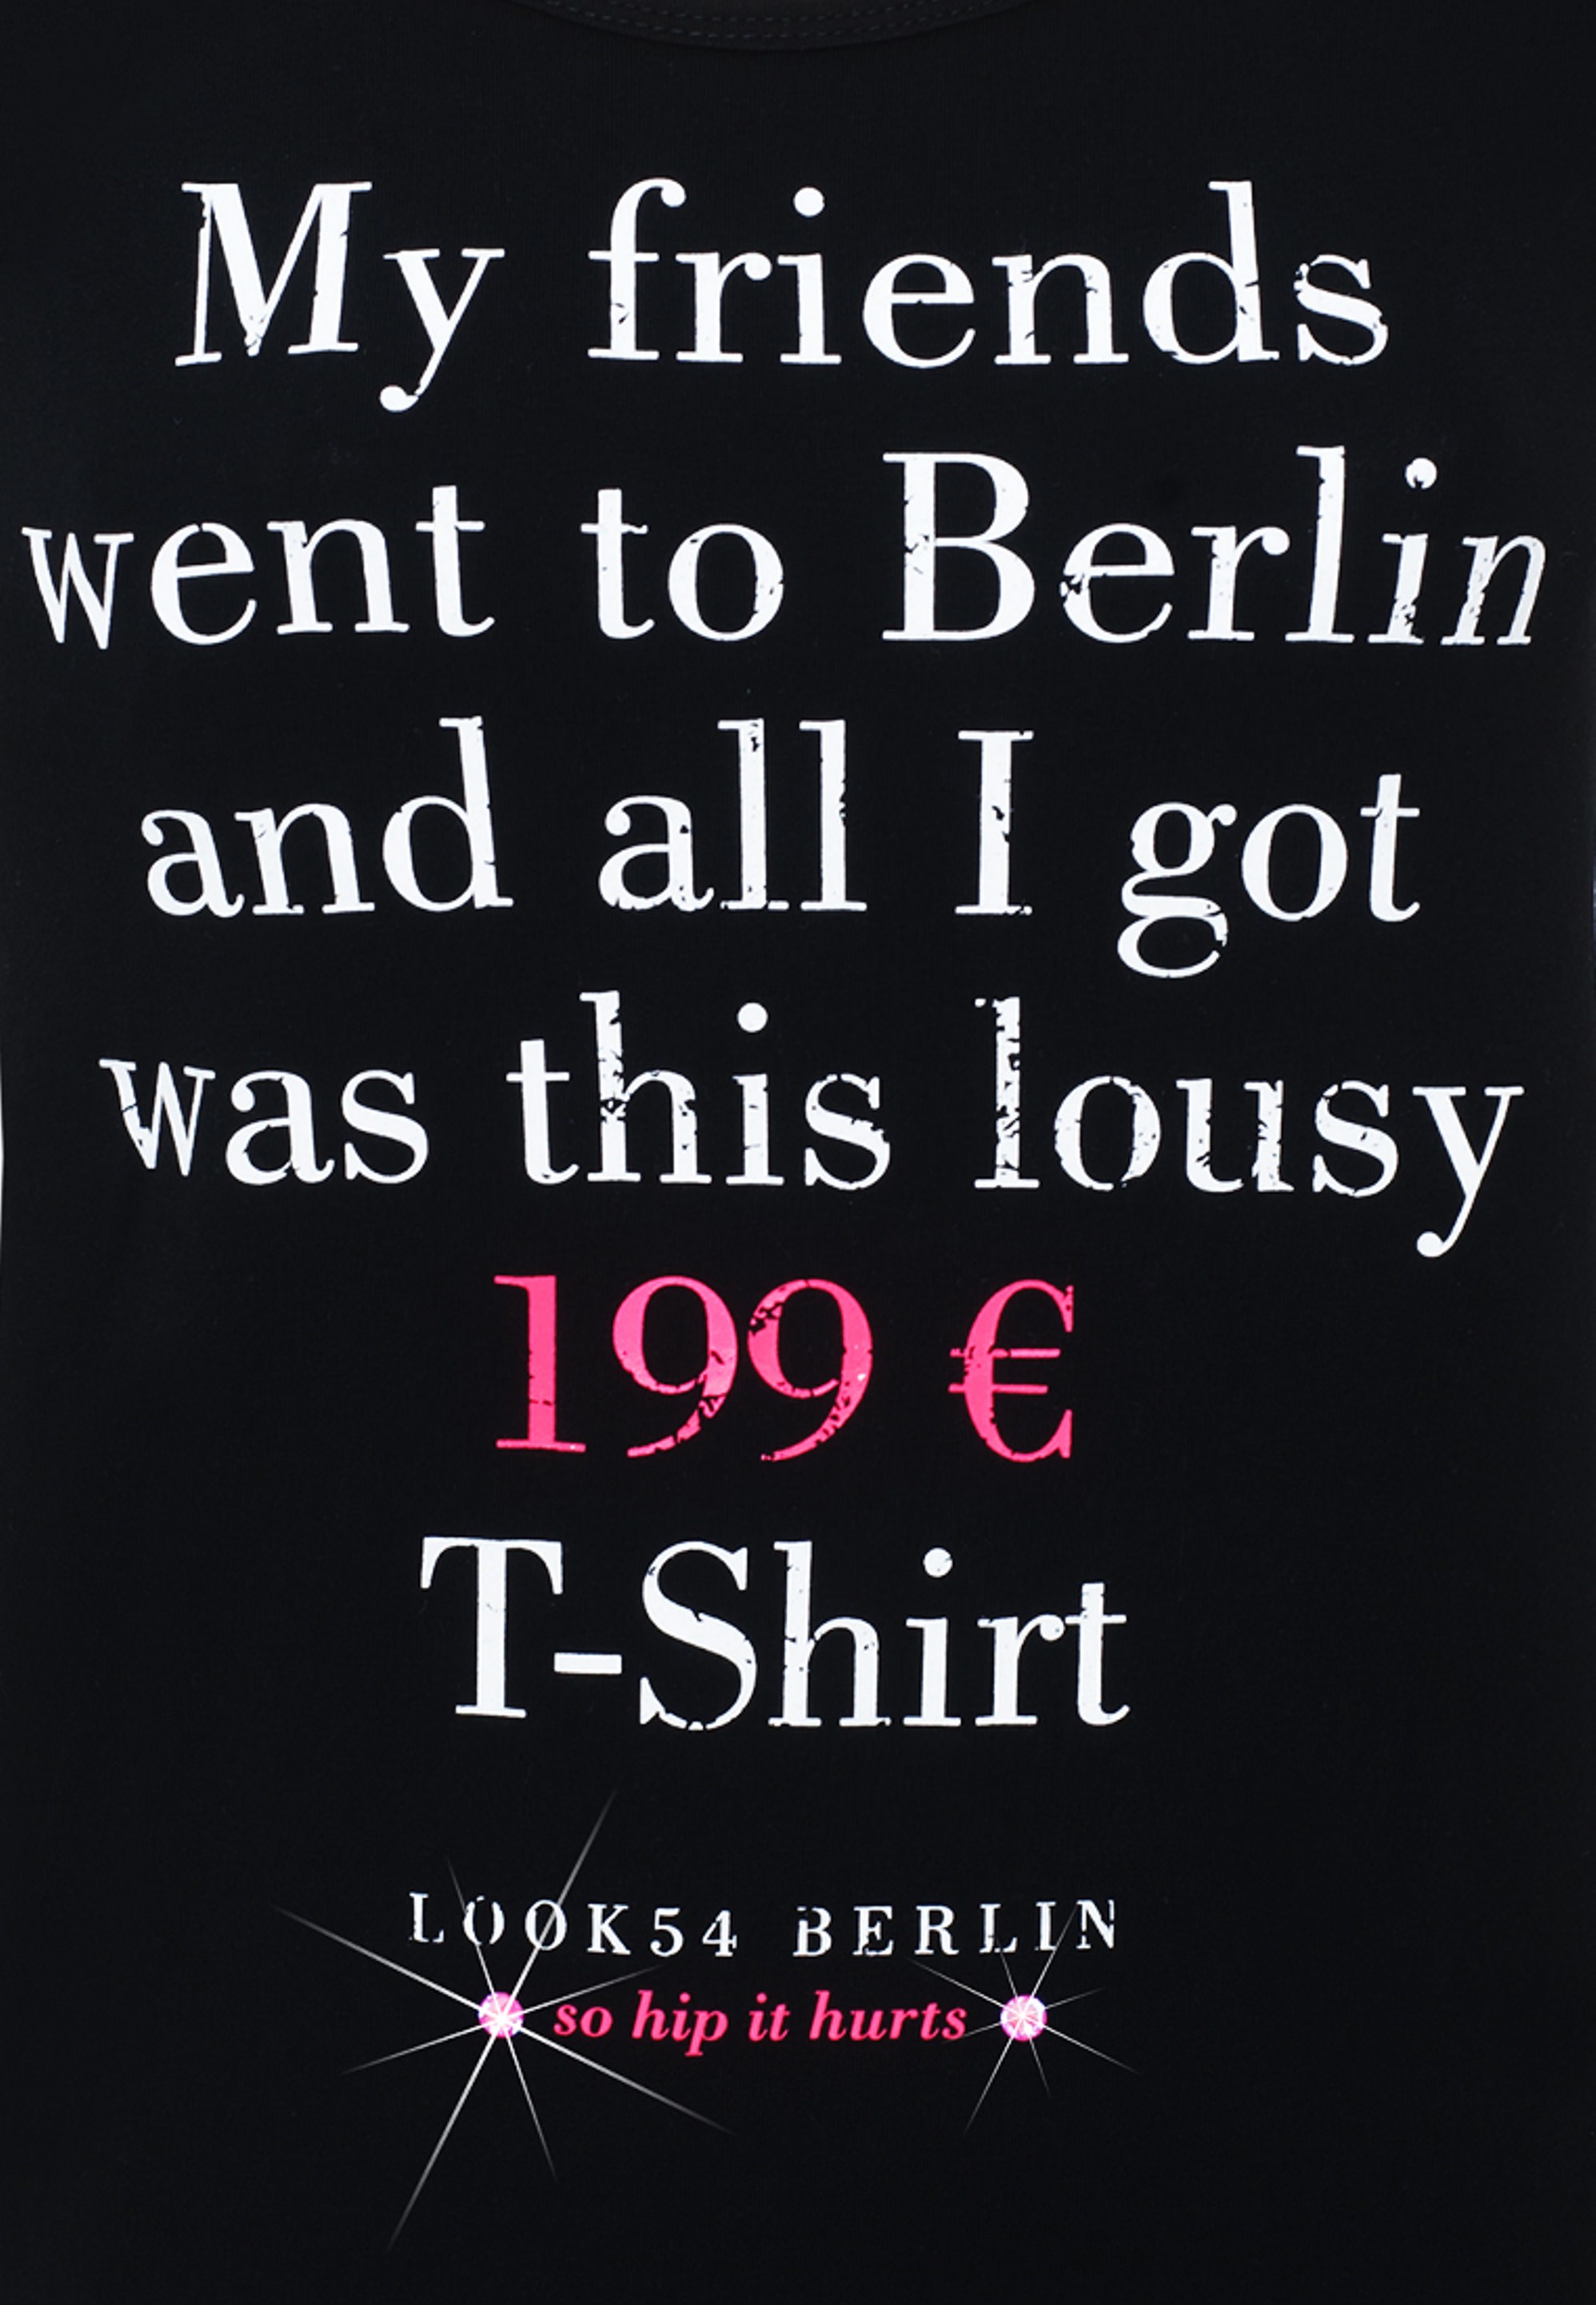 Lousy 199 € Shirt